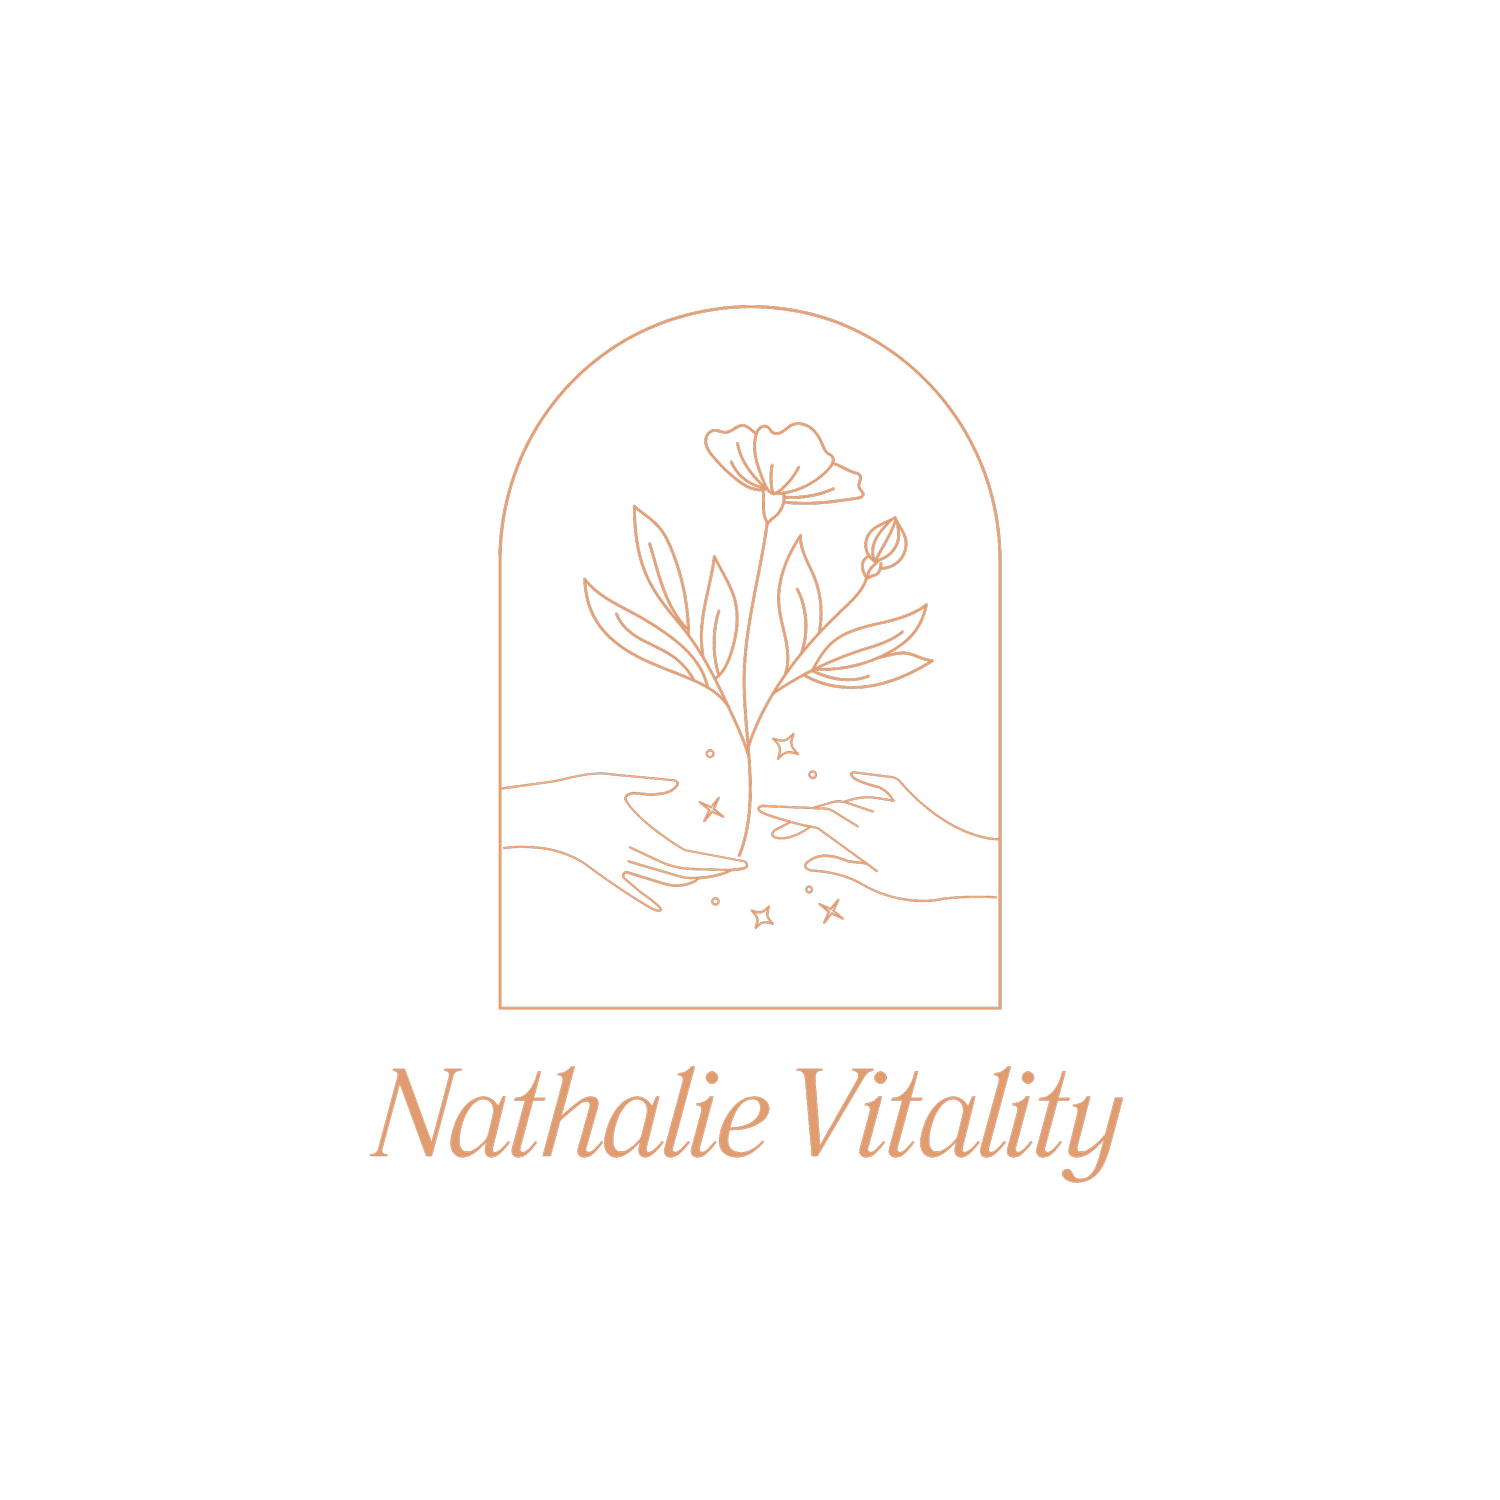 Nathalie Vitality